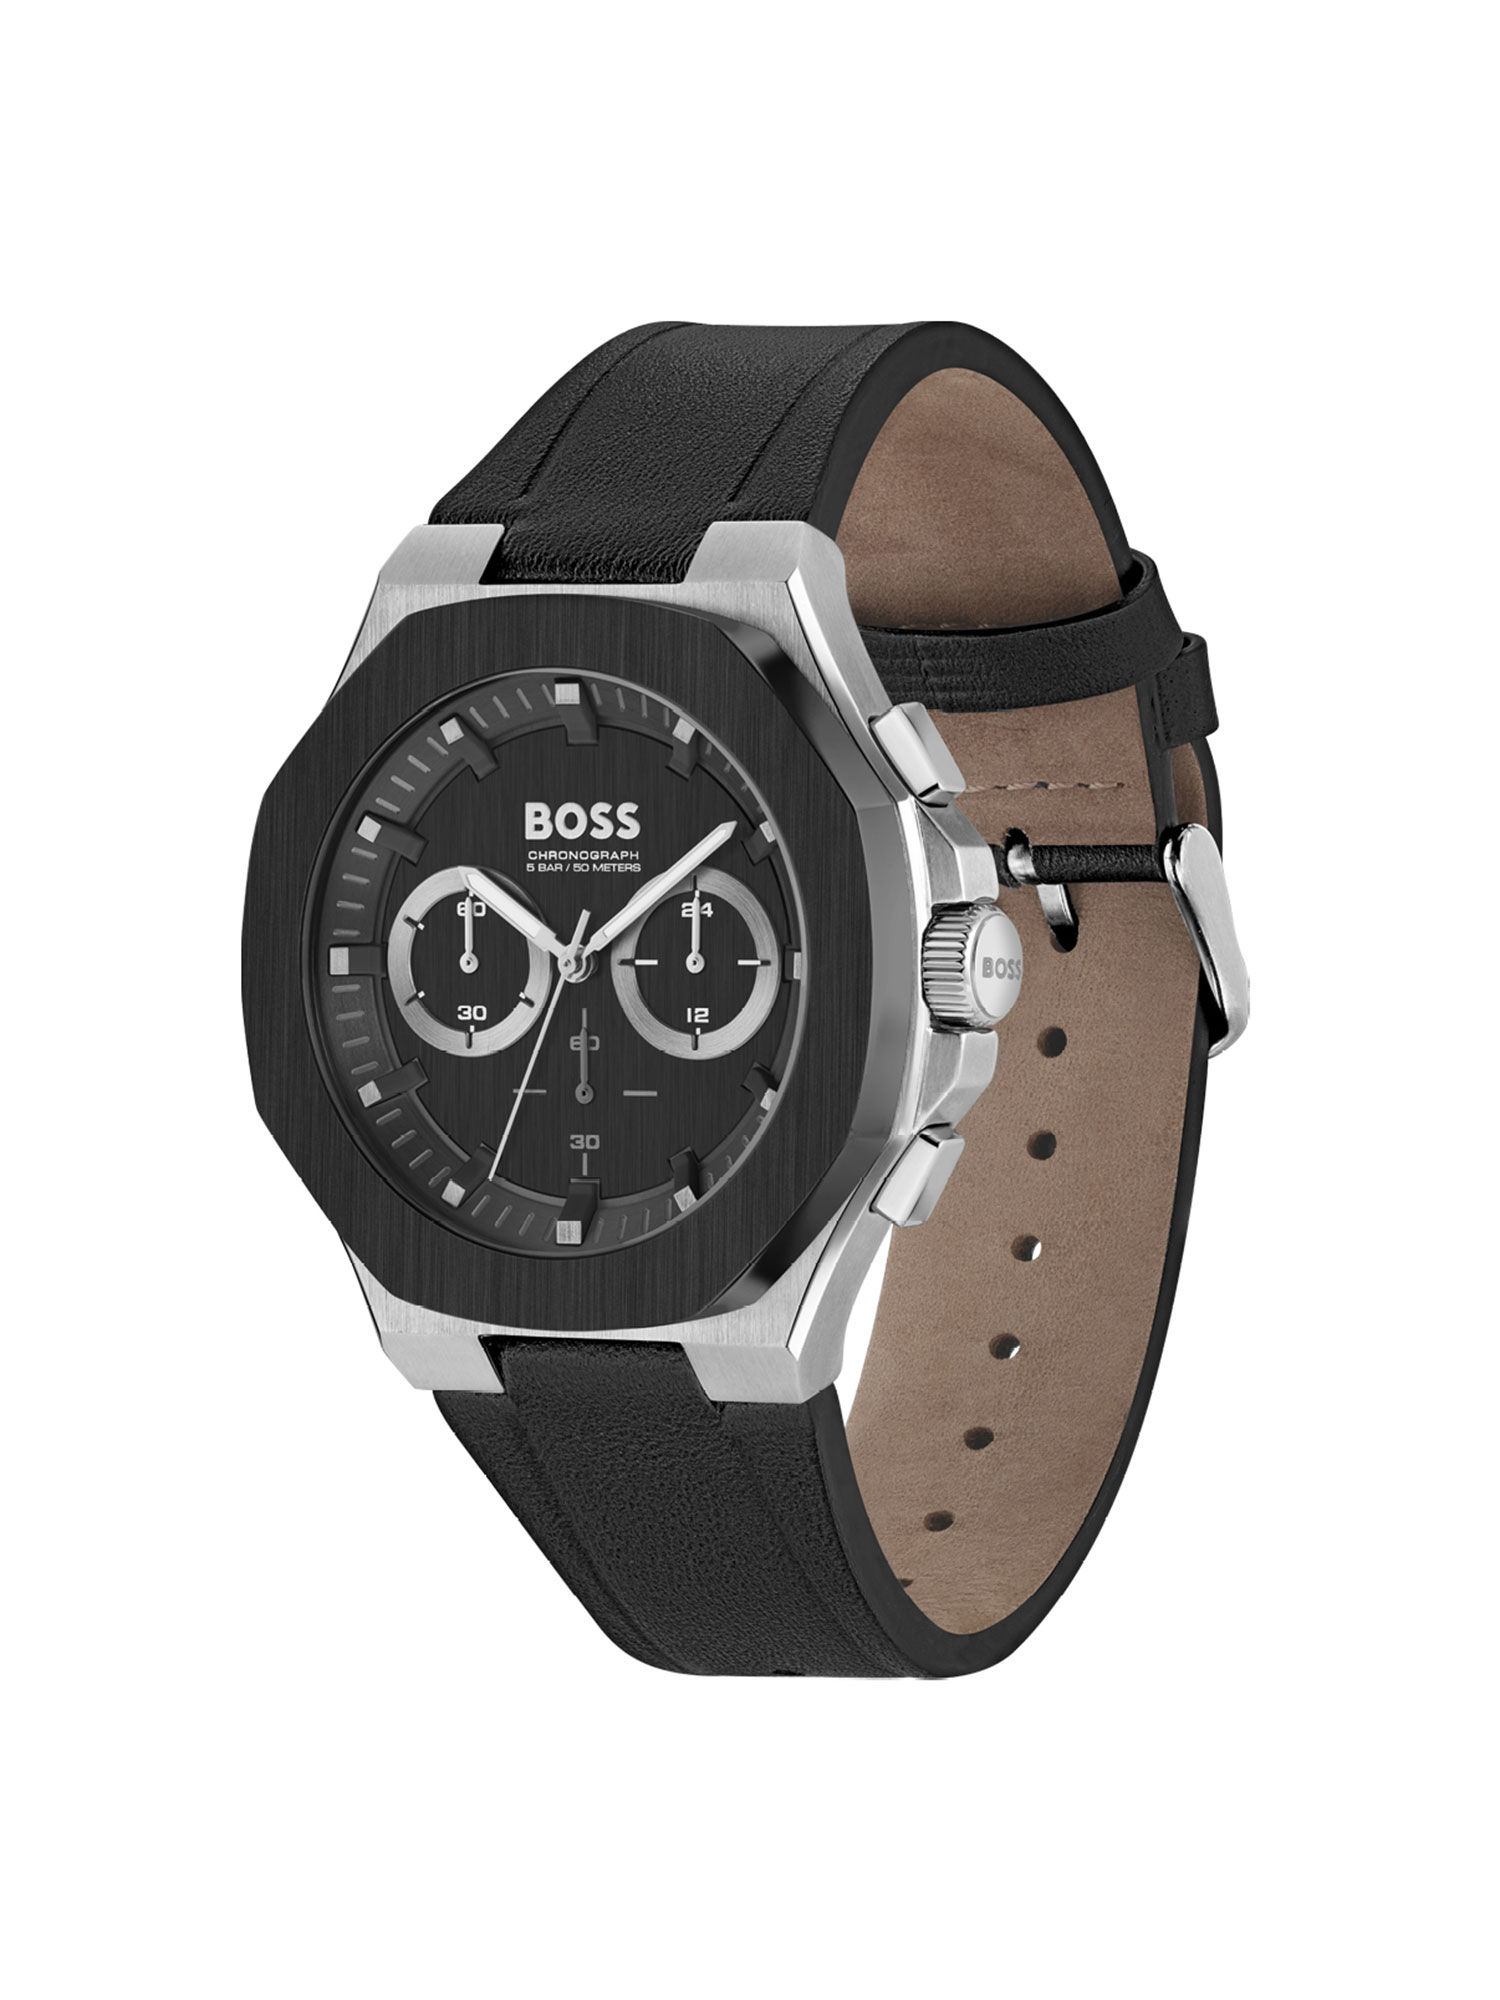 Boss Taper Chronograph Black Octagon Dial Men Watch - 1514085: Buy Boss ...